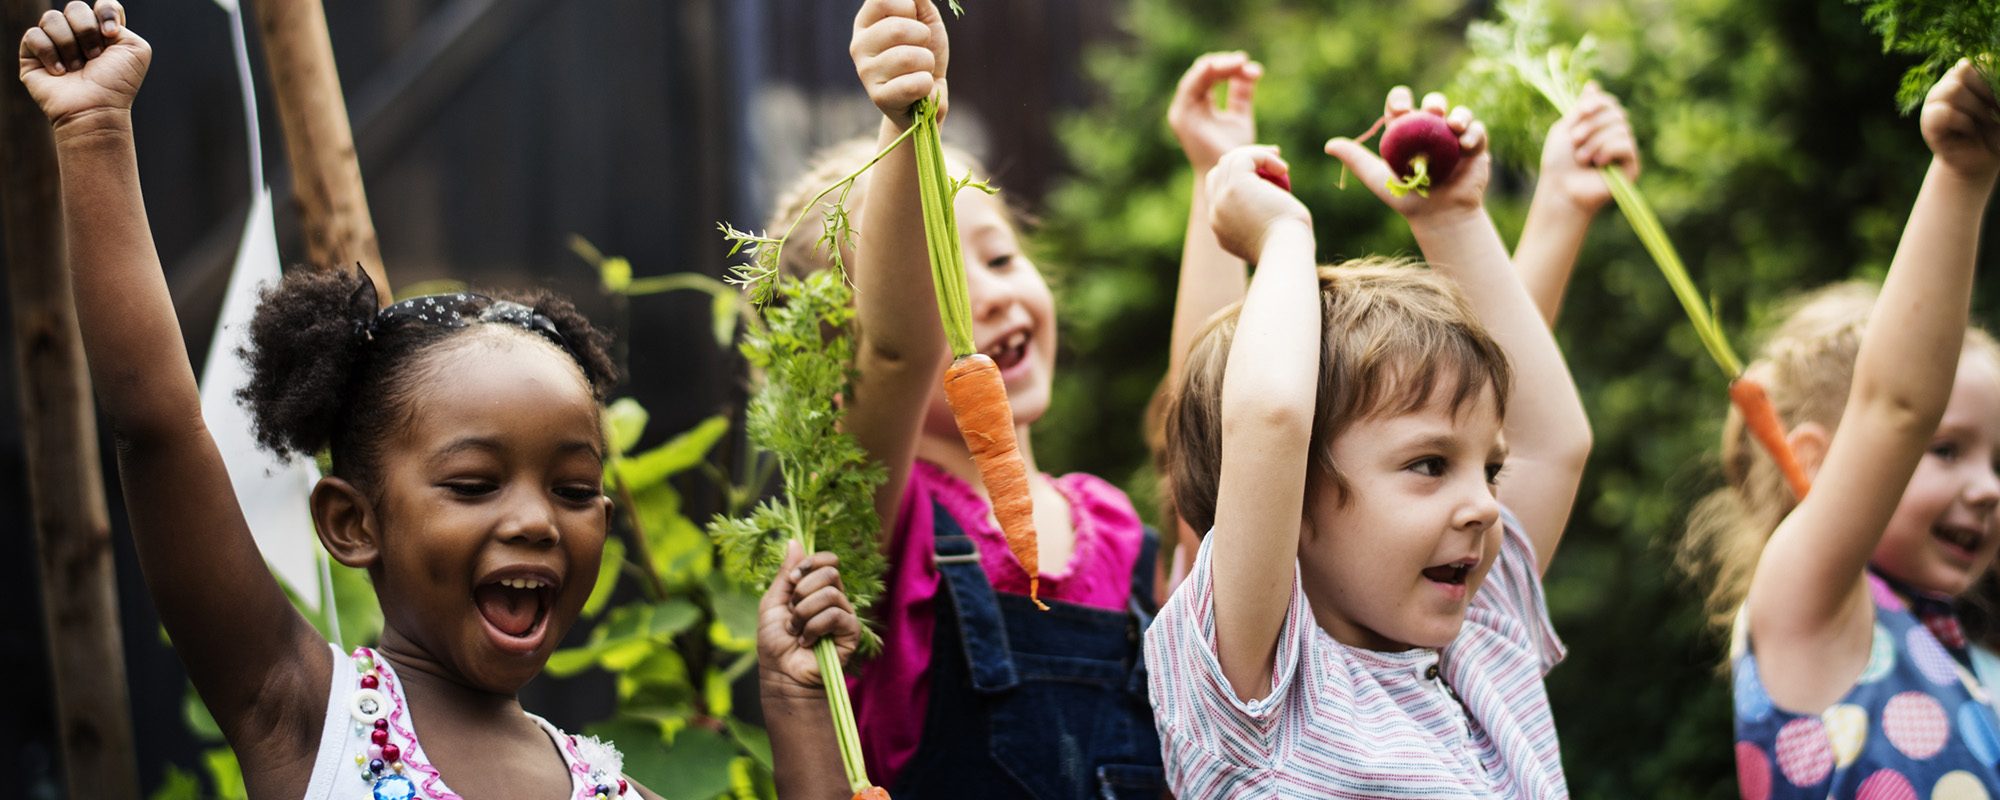 Kids in a vegetable garden